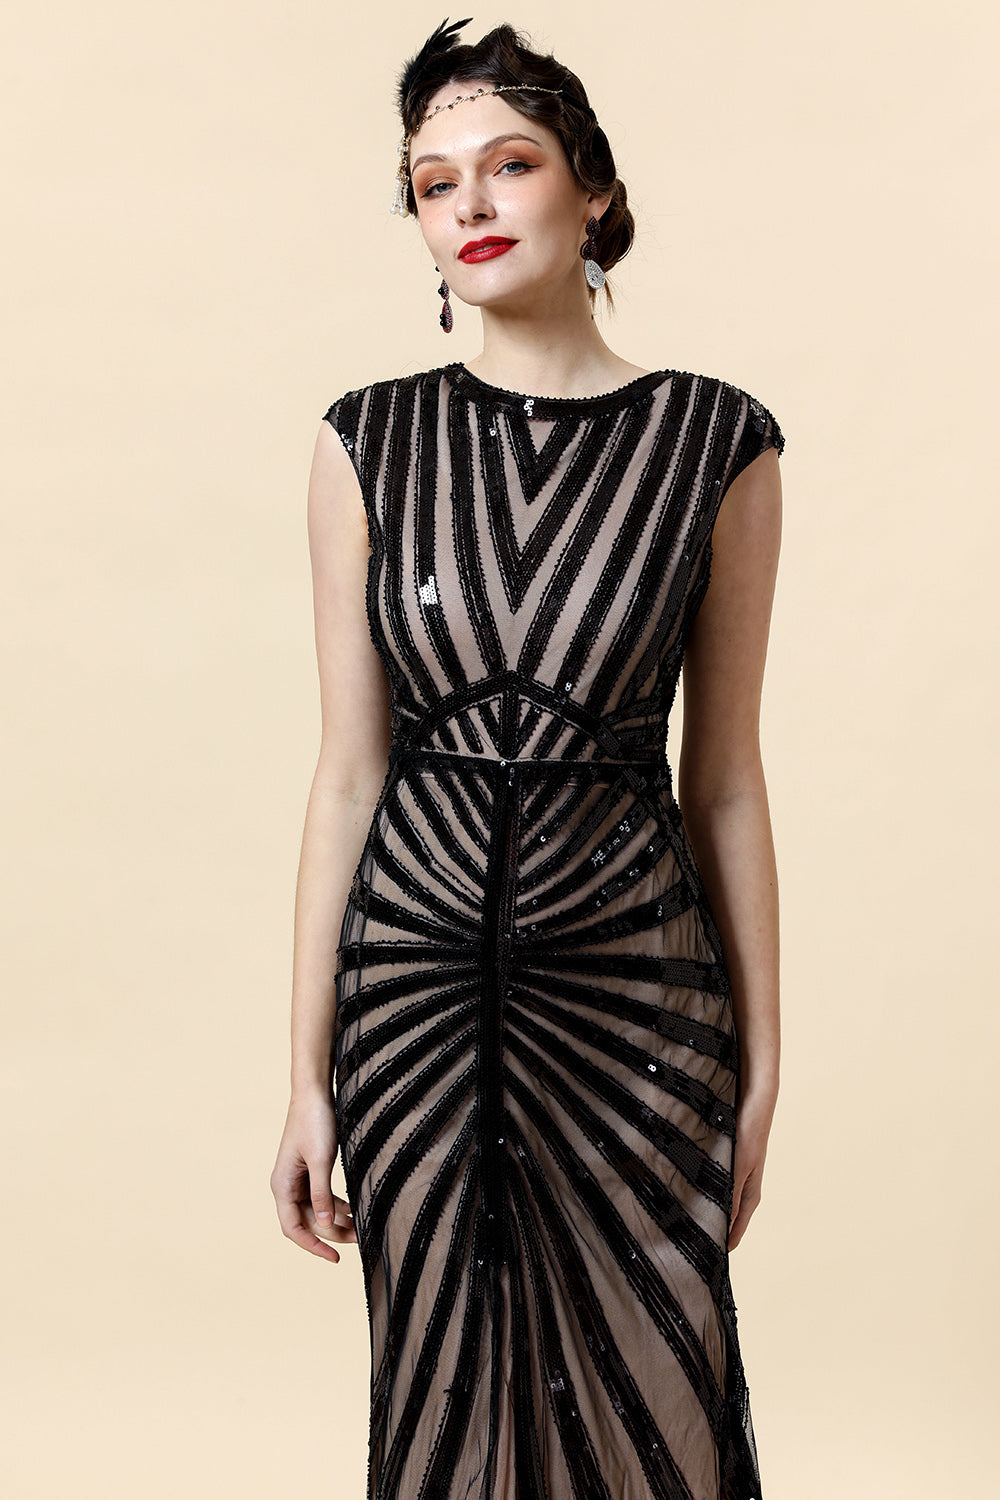 Black Sequins Glitter Midi Flapper Dress with 20s Accessories Set